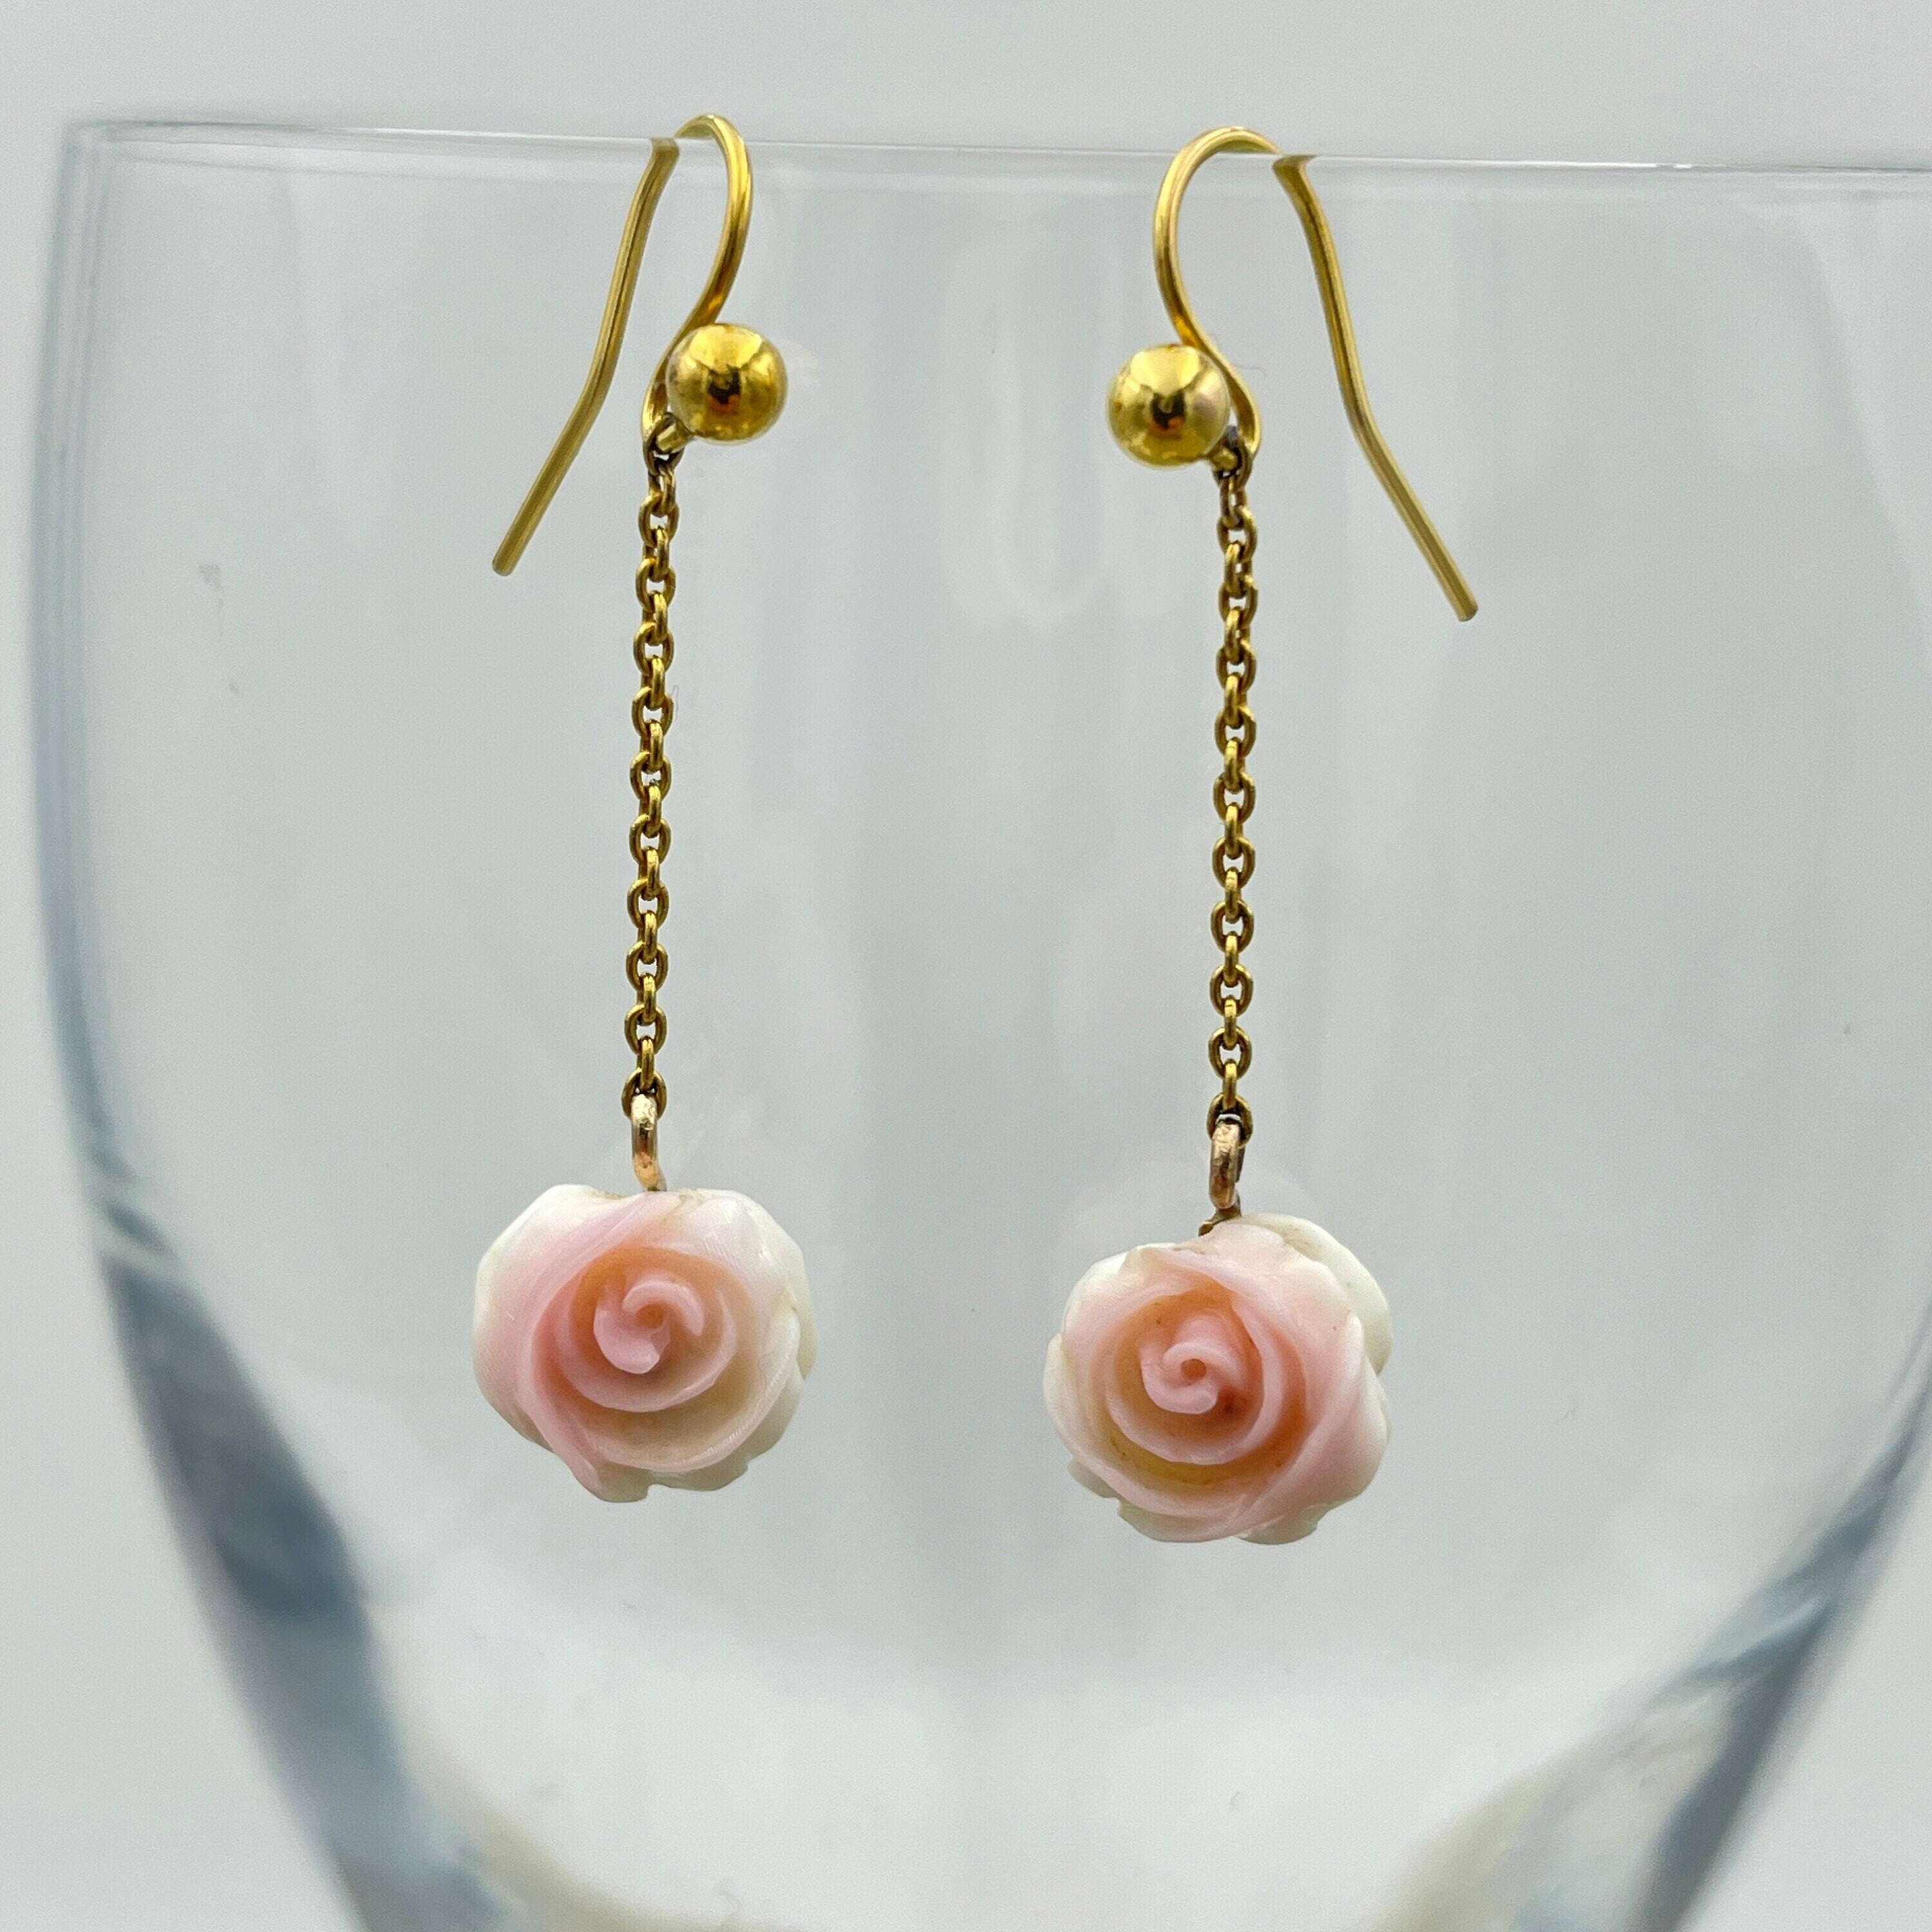 Vintage carved coral rose flower 9ct gold drop earrings c1920s